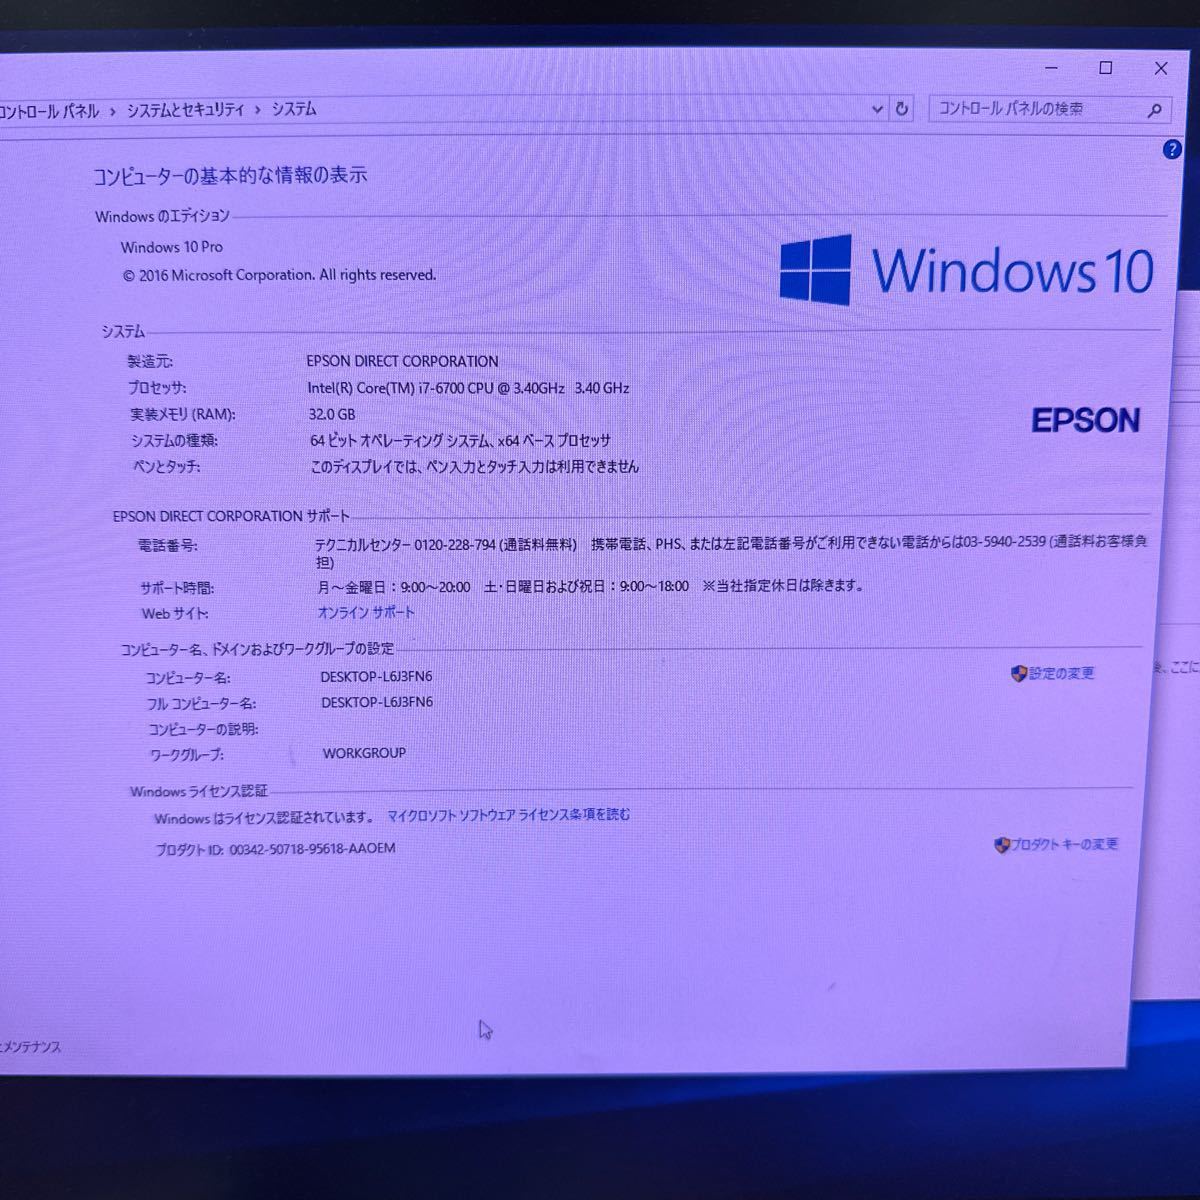 EPSON Endever MR8000L Intel(R) Core(TM) i7-6700 CPU @ 3.40GHz 32.0 GB Windows10 S NVMe WDS250G3X0C Used DVDRWの画像7